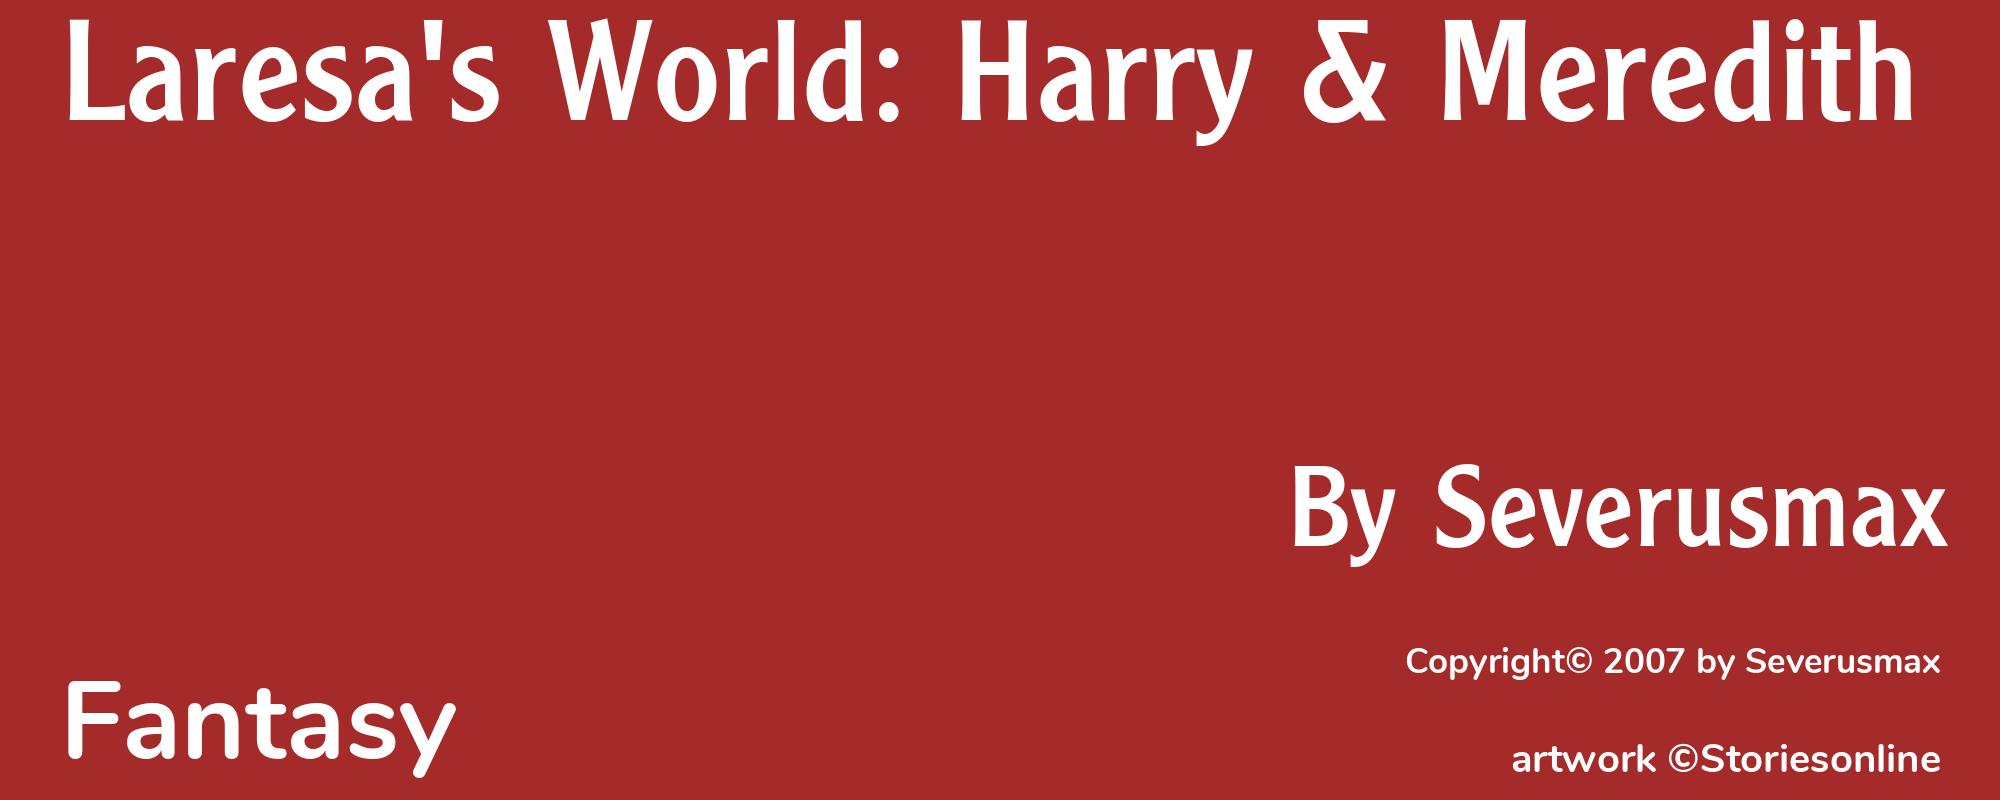 Laresa's World: Harry & Meredith - Cover